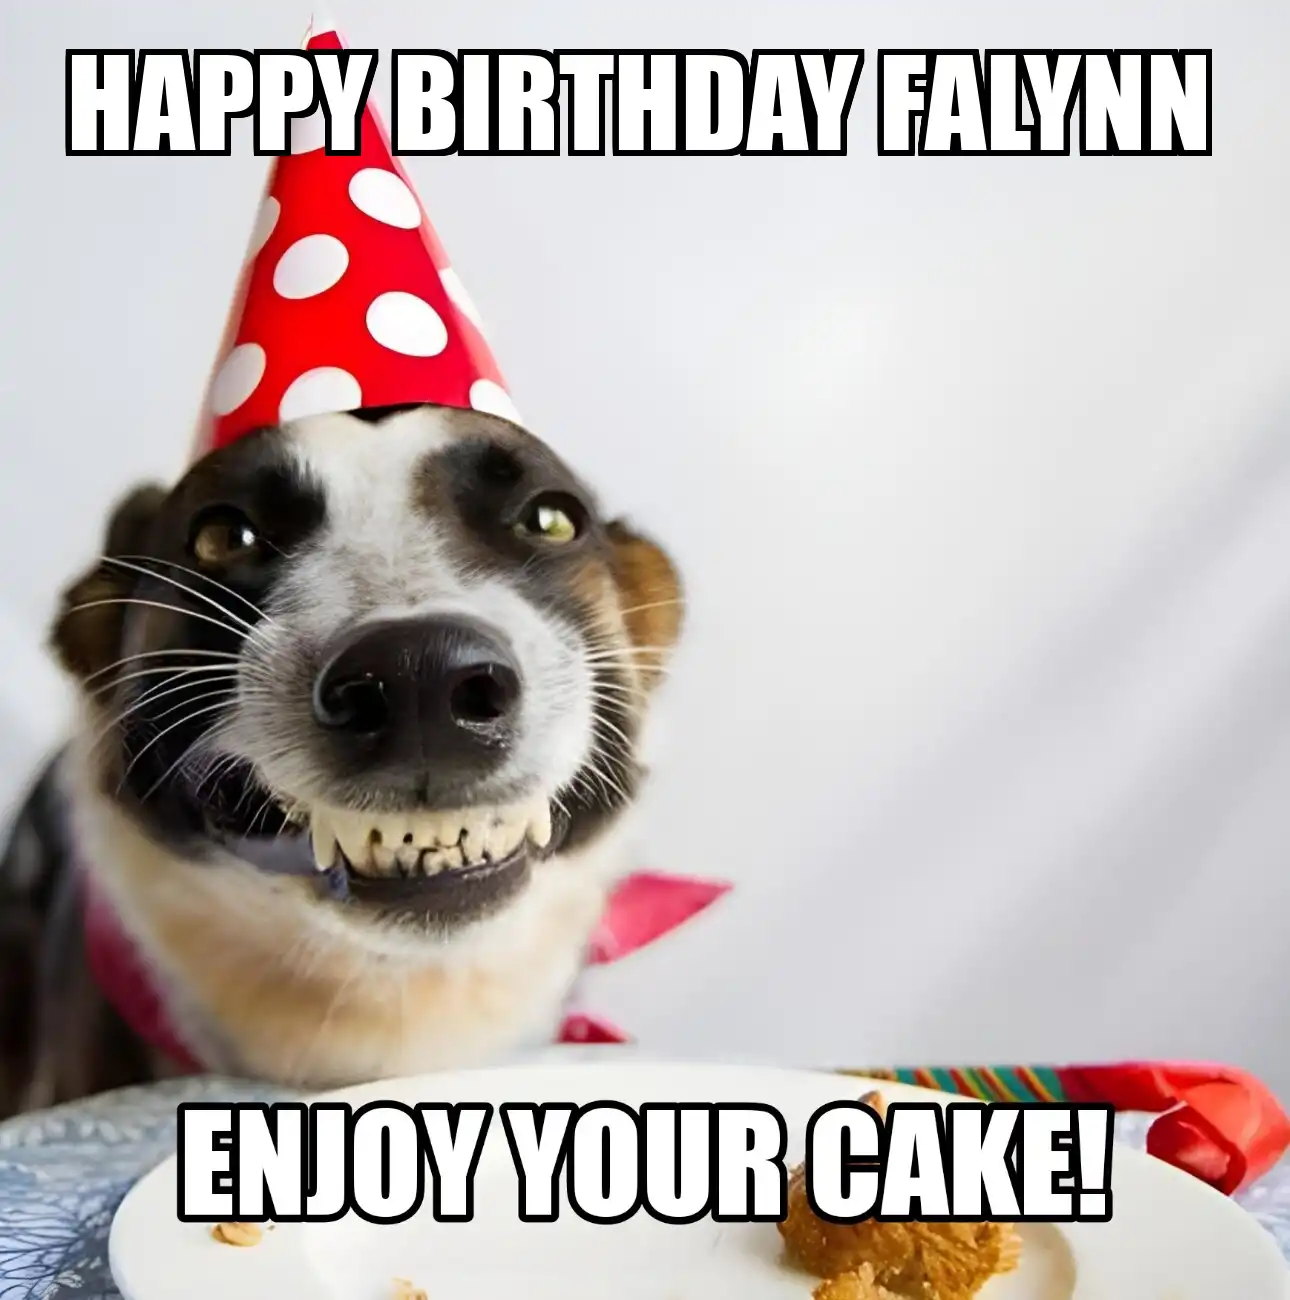 Happy Birthday Falynn Enjoy Your Cake Dog Meme